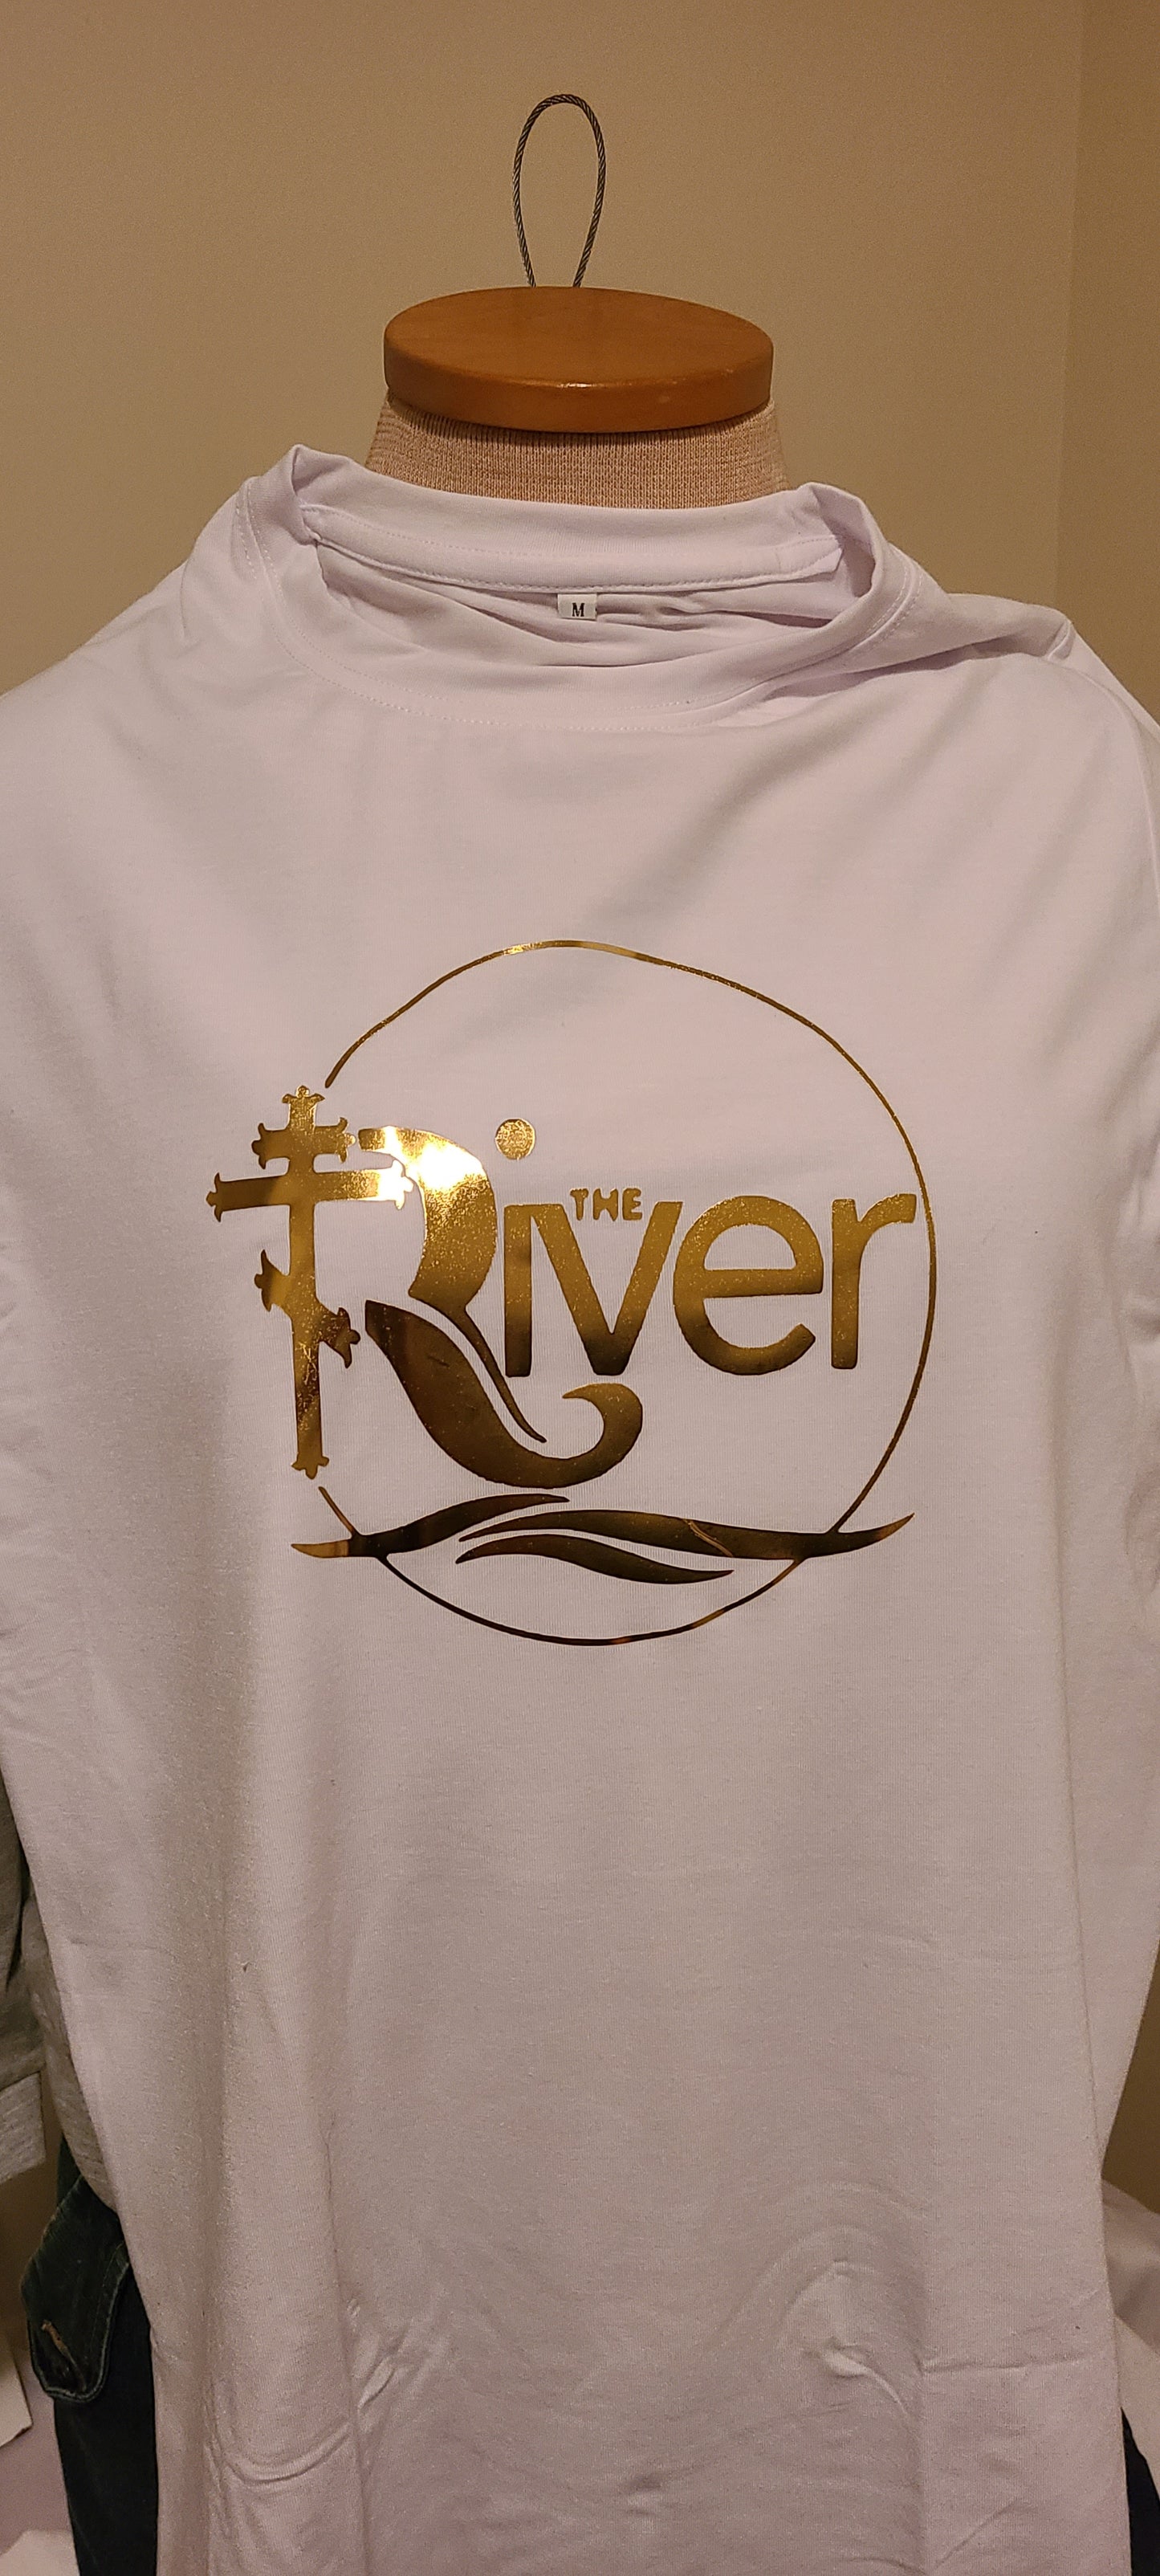 River Tee